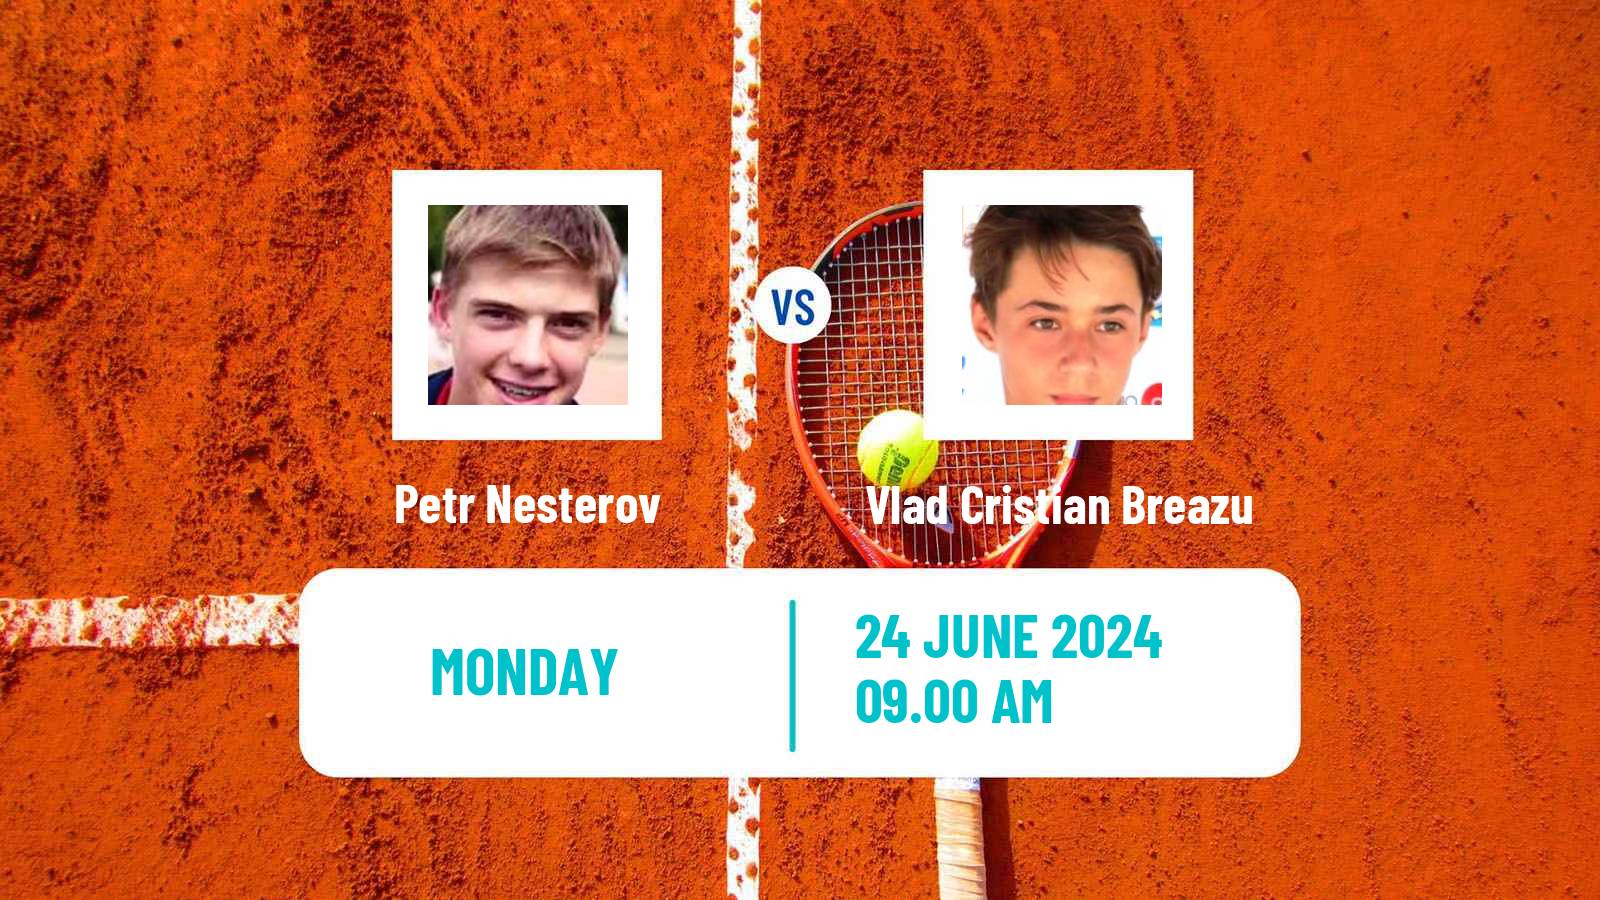 Tennis ITF M25 Satu Mare Men Petr Nesterov - Vlad Cristian Breazu